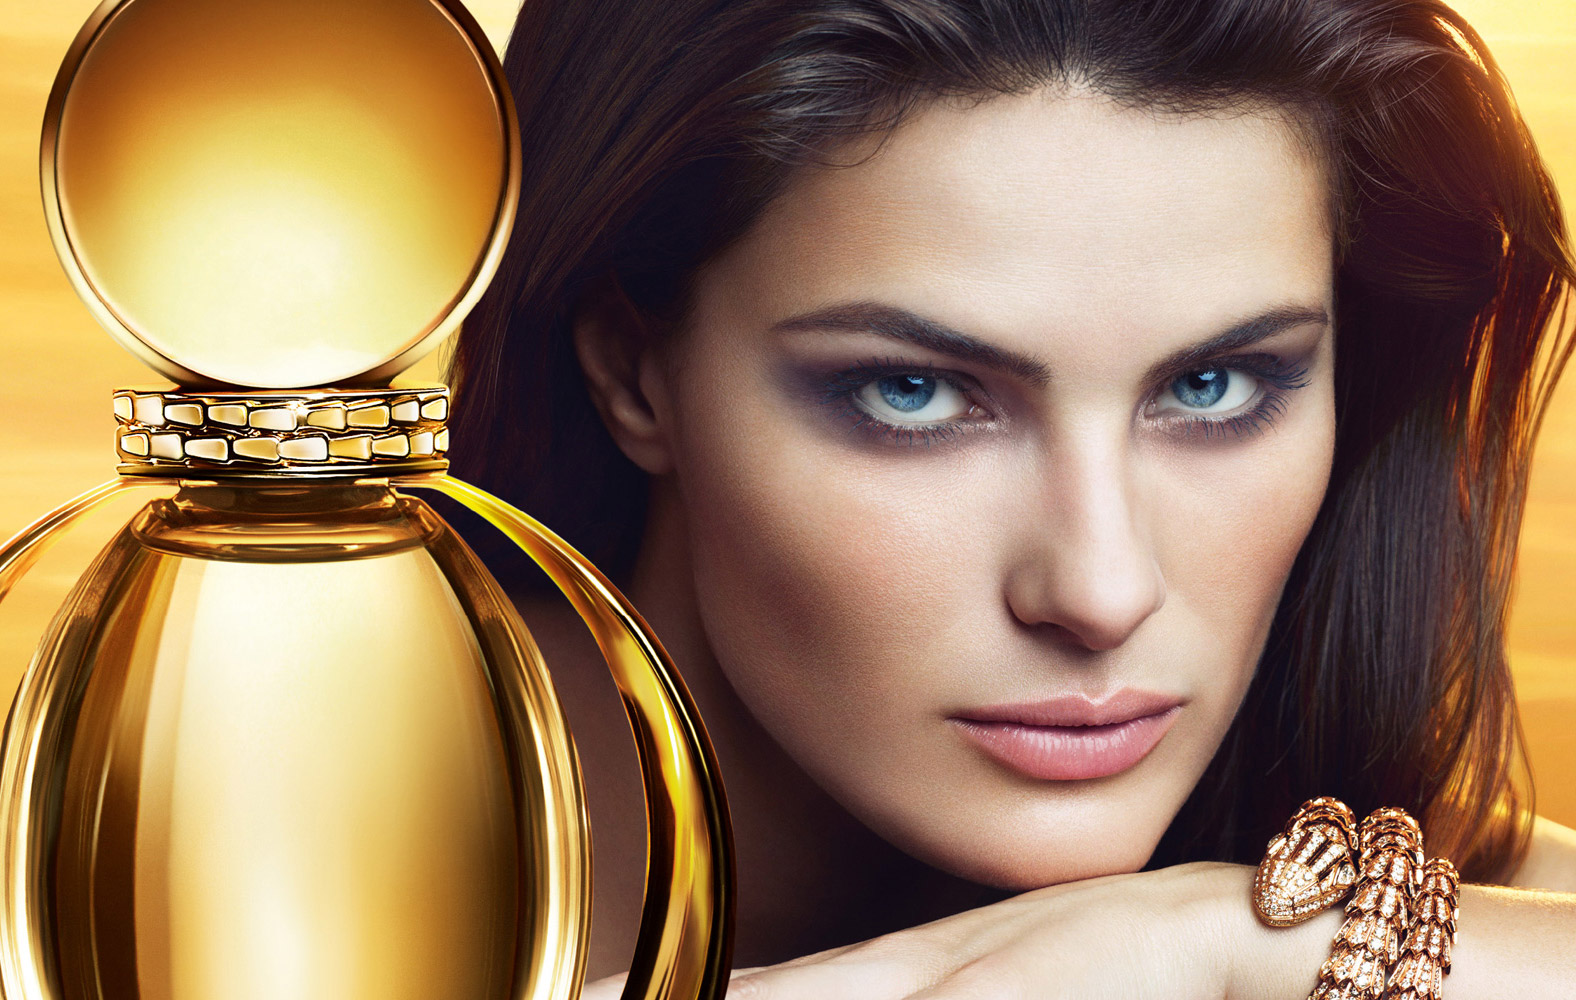 bvlgari-goldea-eau-de-parfum-3-ad-featured manken poster.jpg